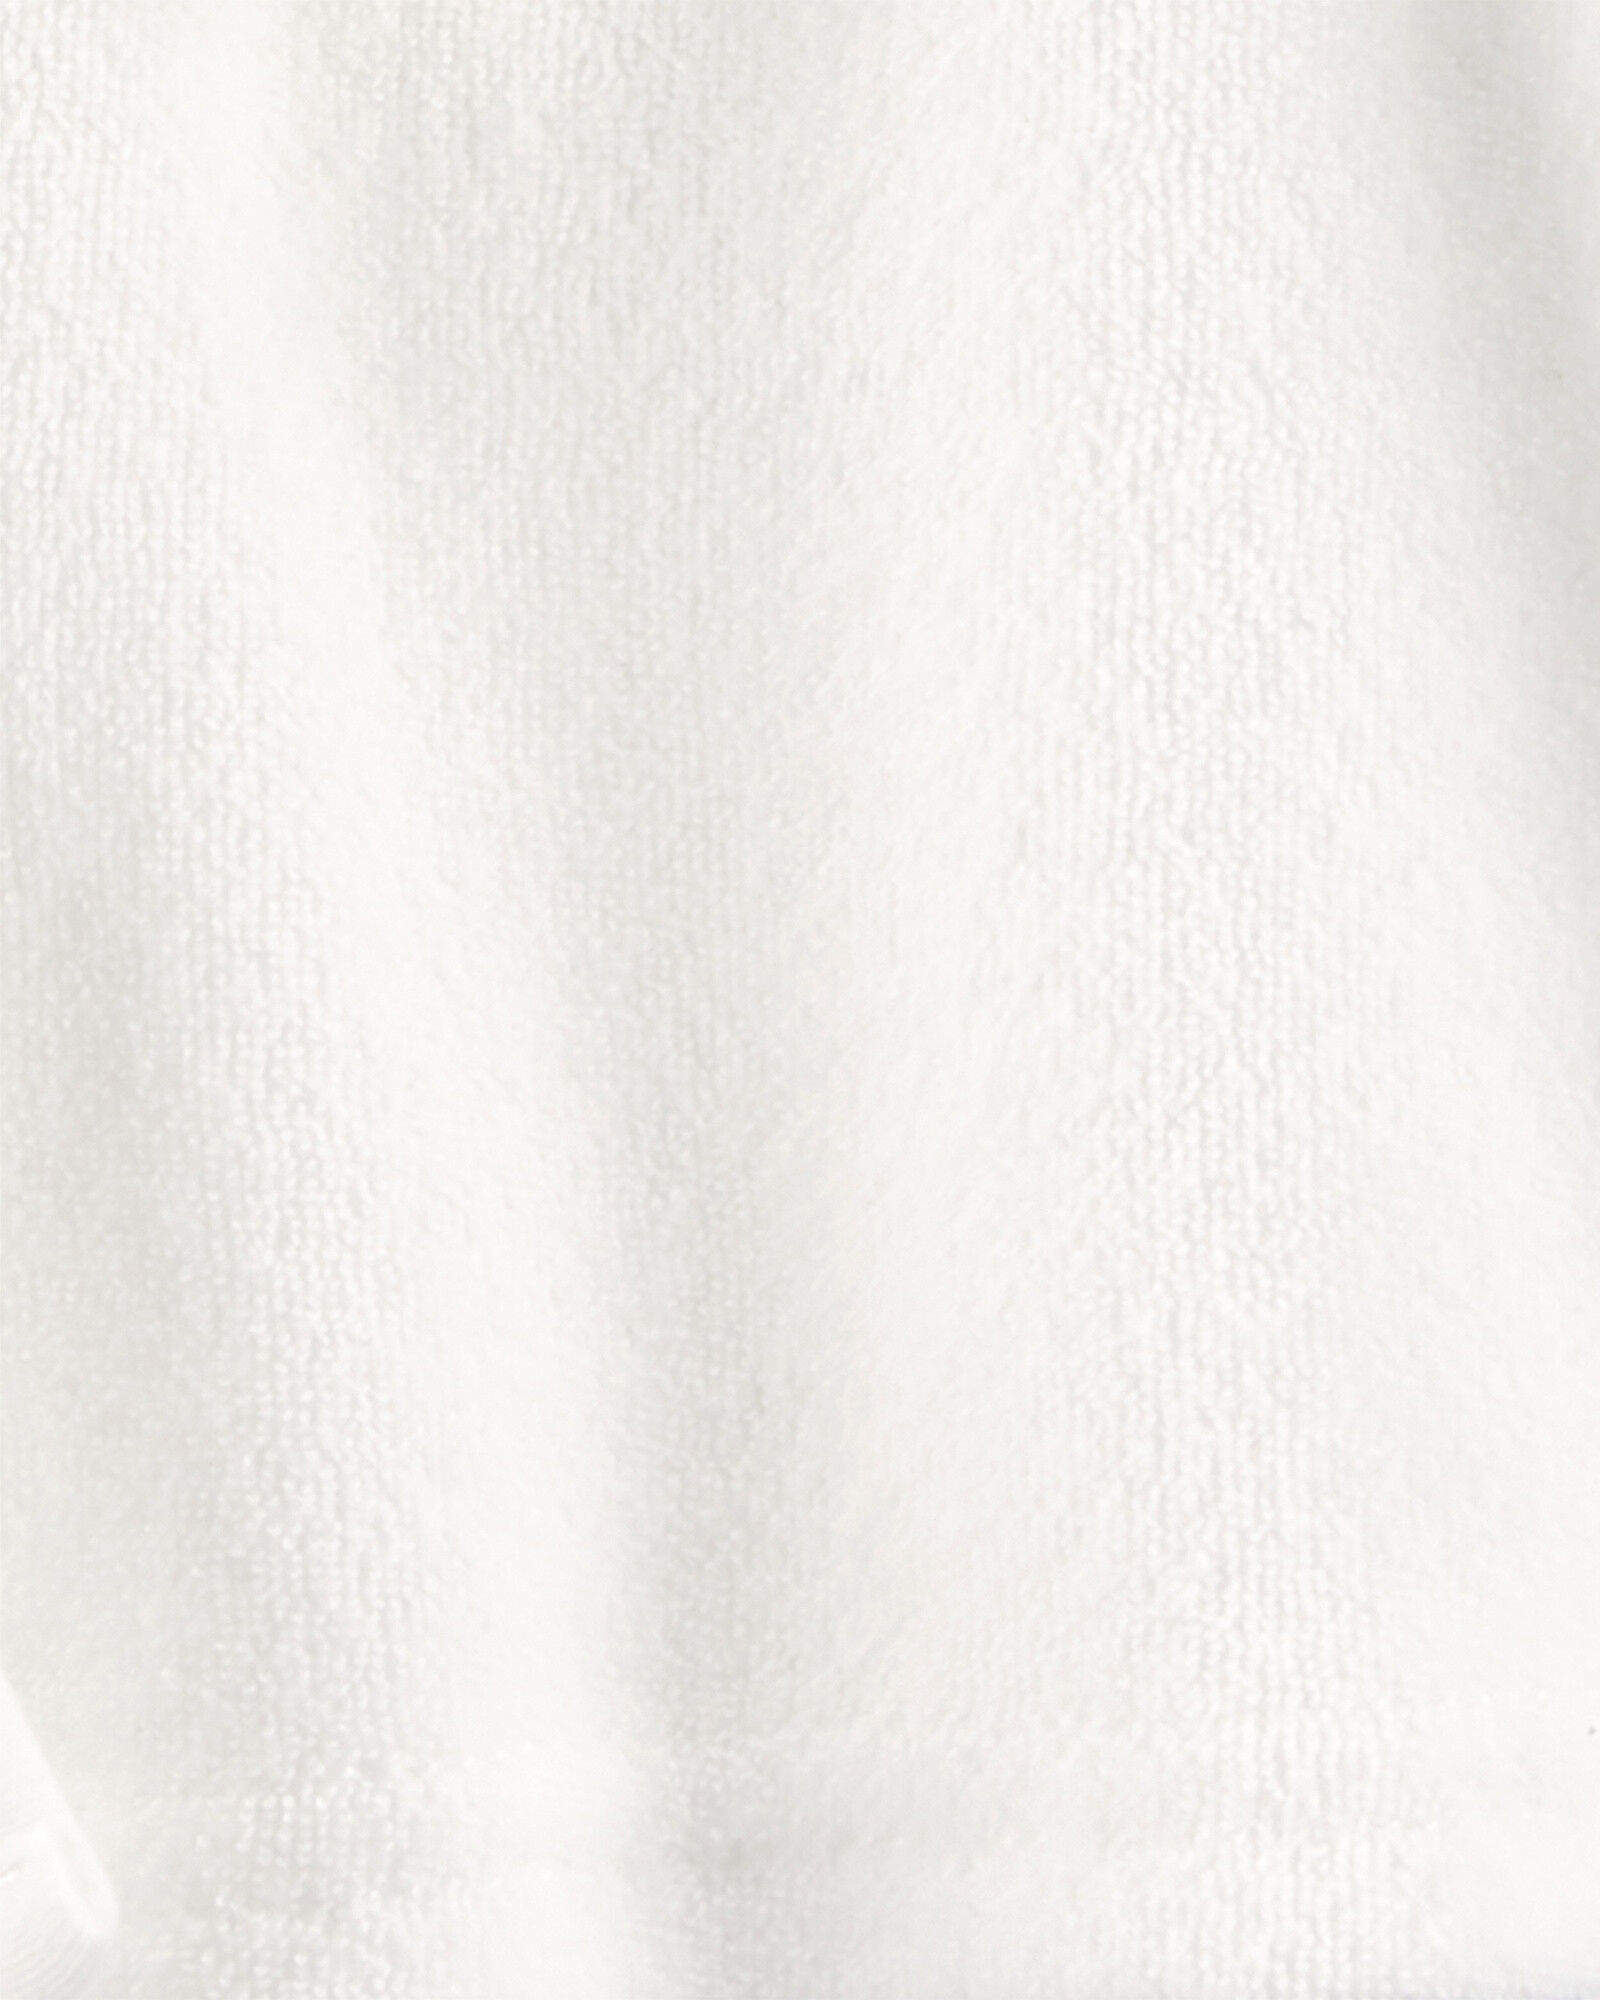 Bata de algodón terry, con capucha, diseño vaquita. Talles 0-9M Sin color